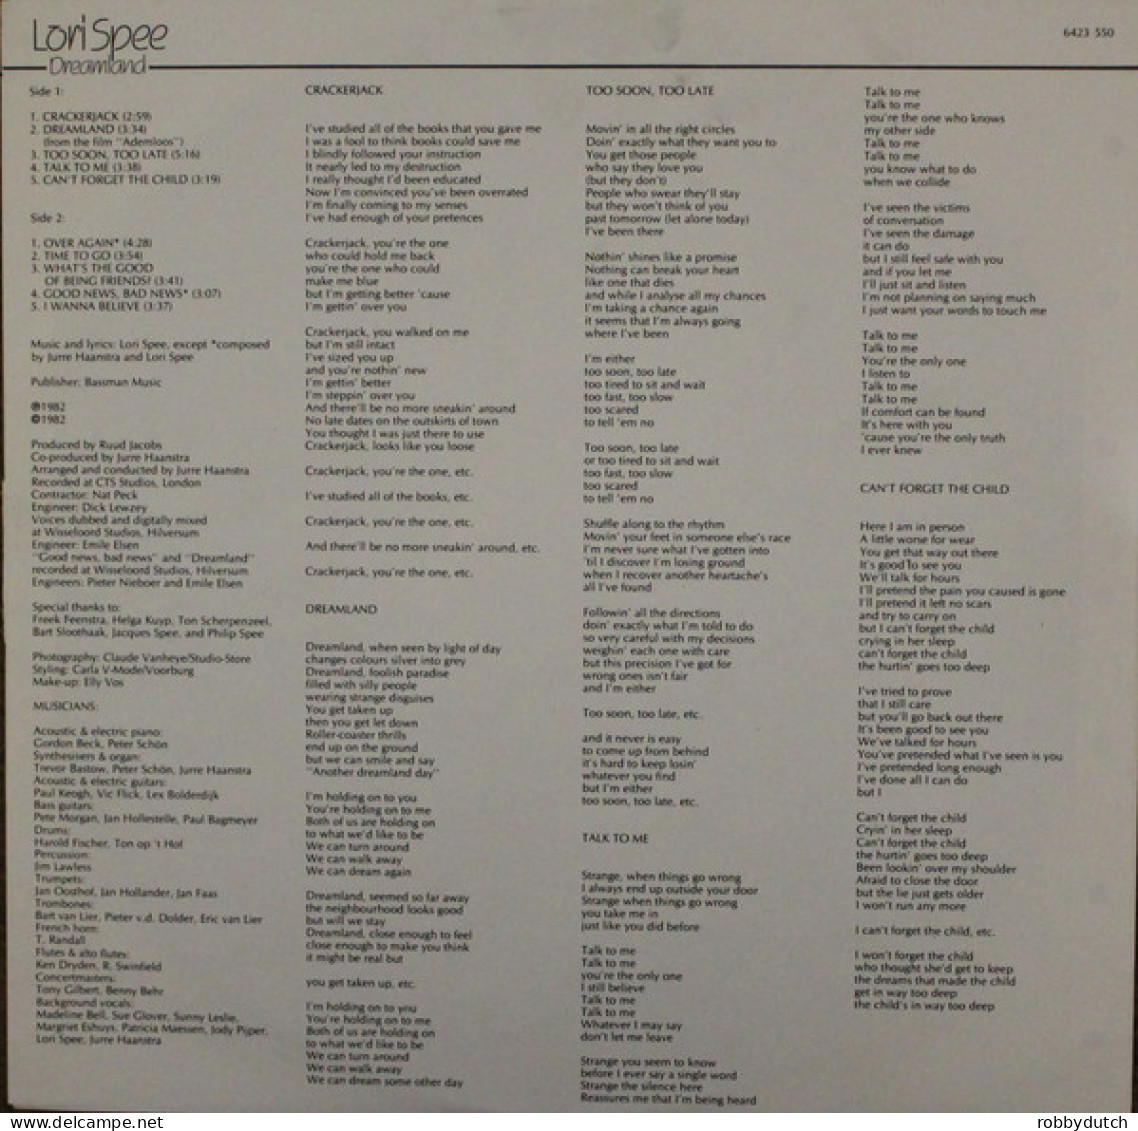 * LP *  LORI SPEE - DREAMLAND (Holland 1982 EX) - Disco, Pop